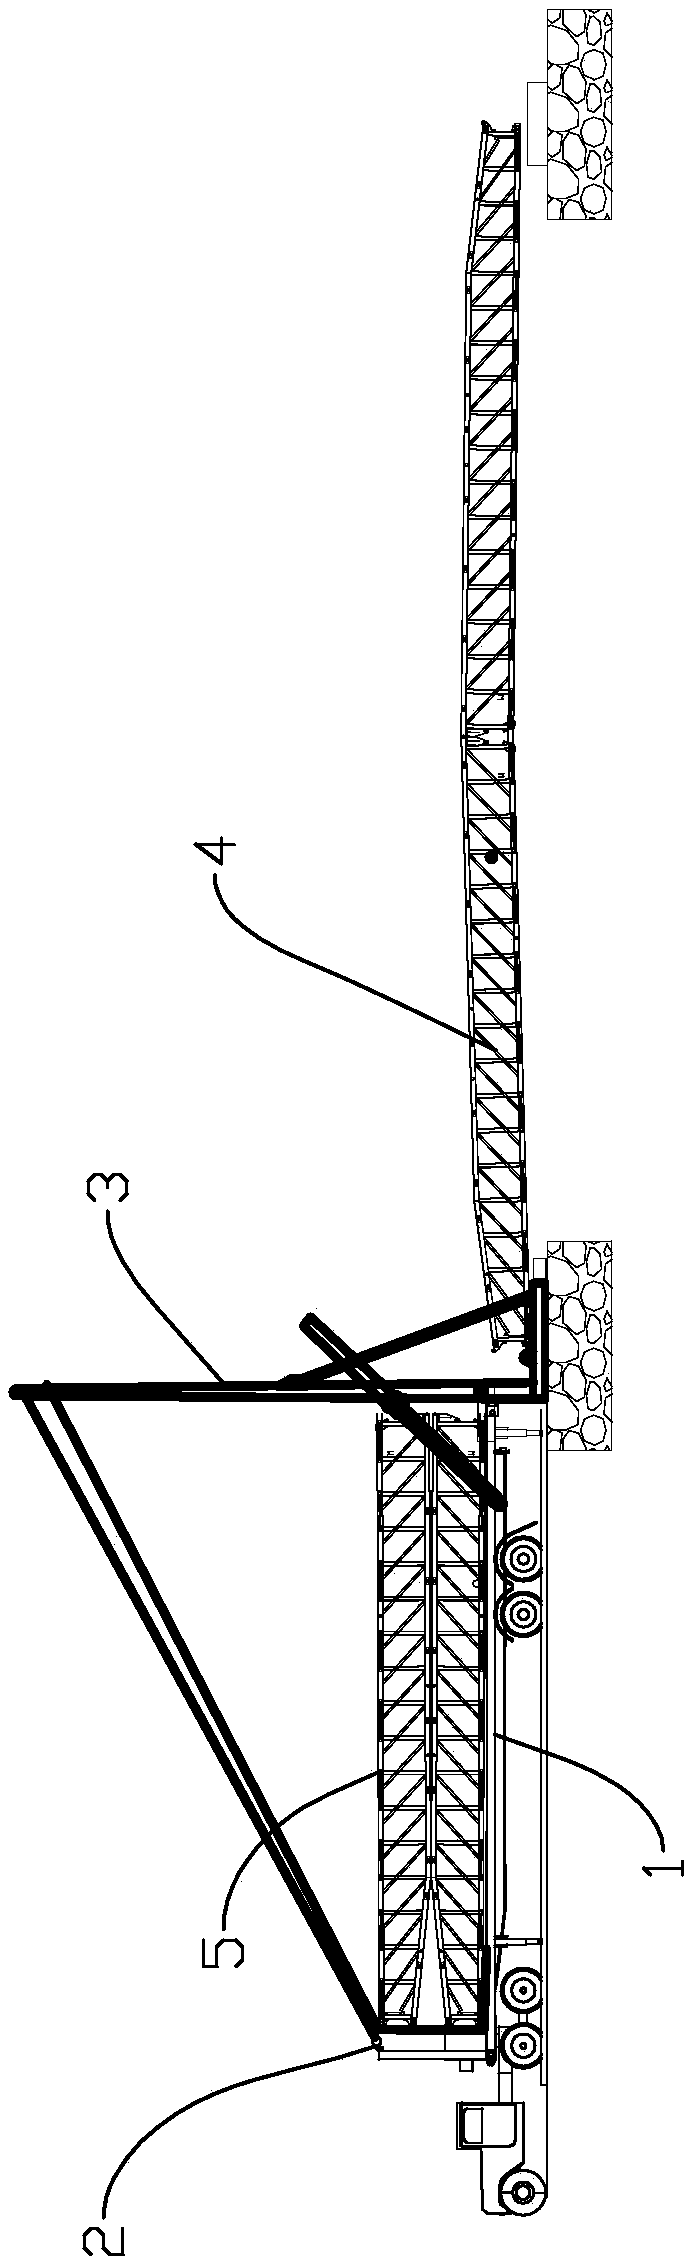 A method for erecting a split steel bridge